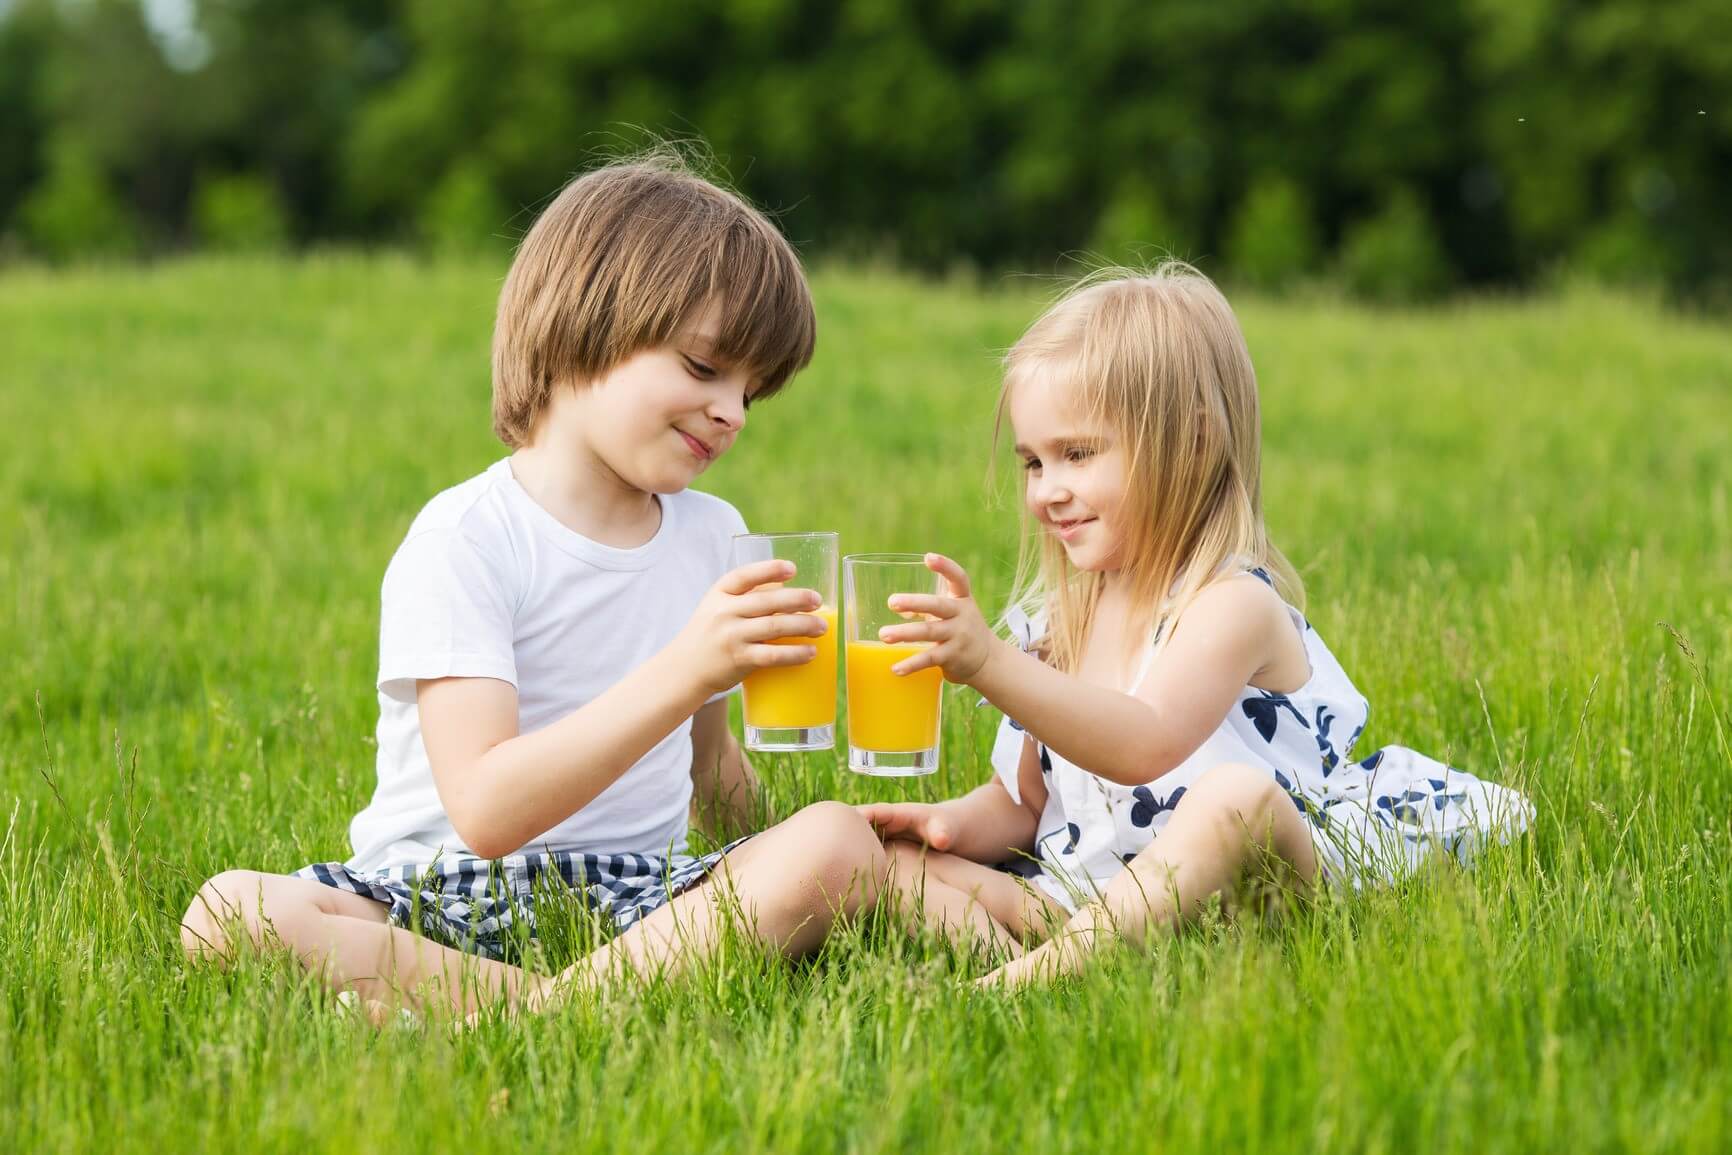 Can Fruit Juice Really Damage your Kids' Teeth? - Southdaviskids